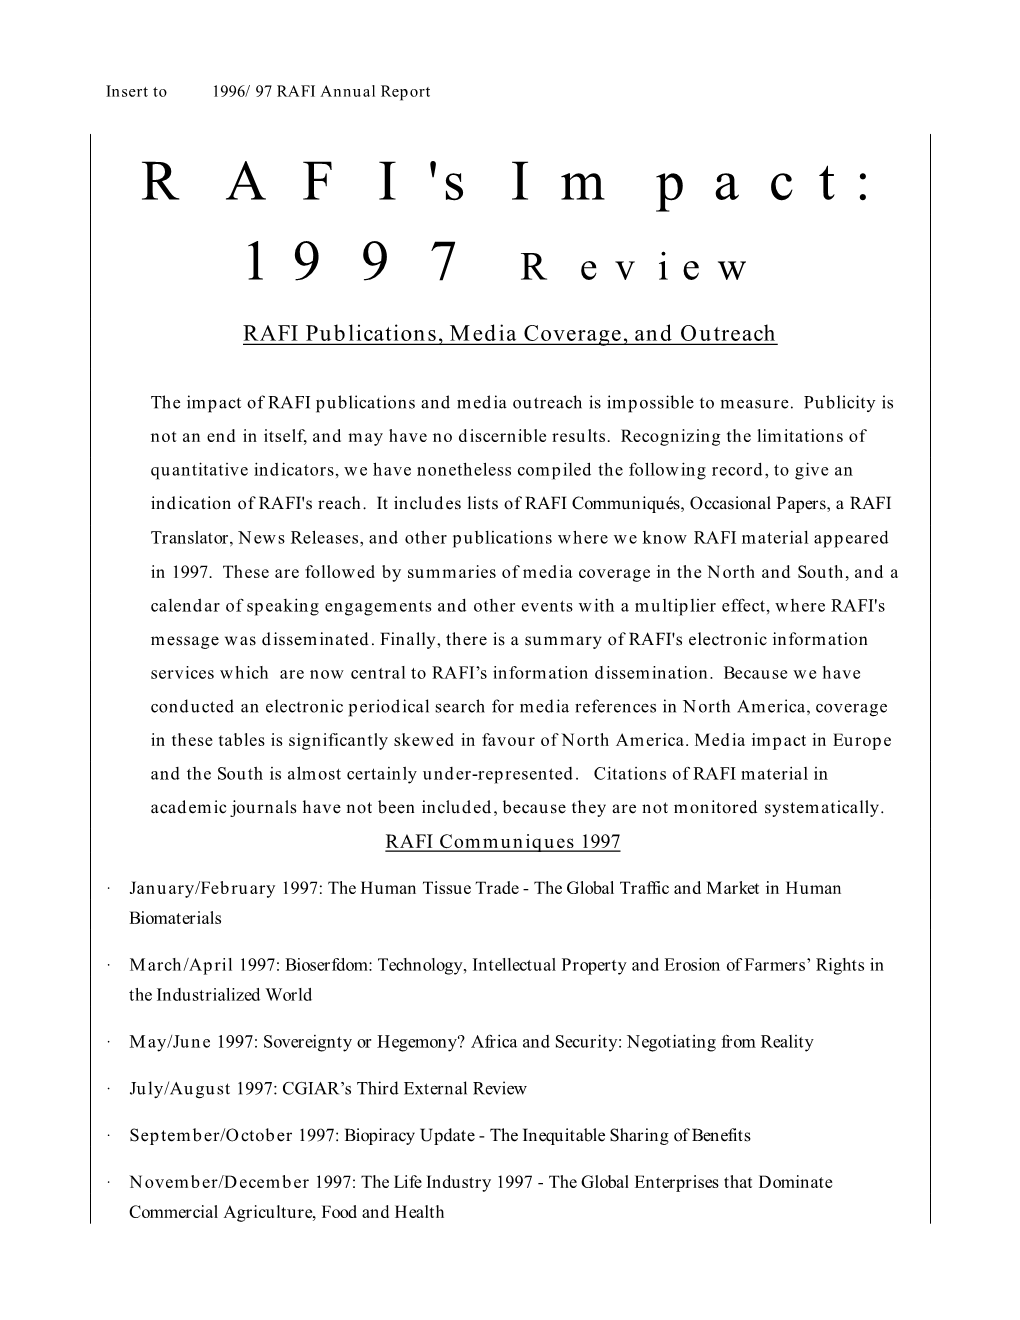 RAFI's Impact: 1997 Review